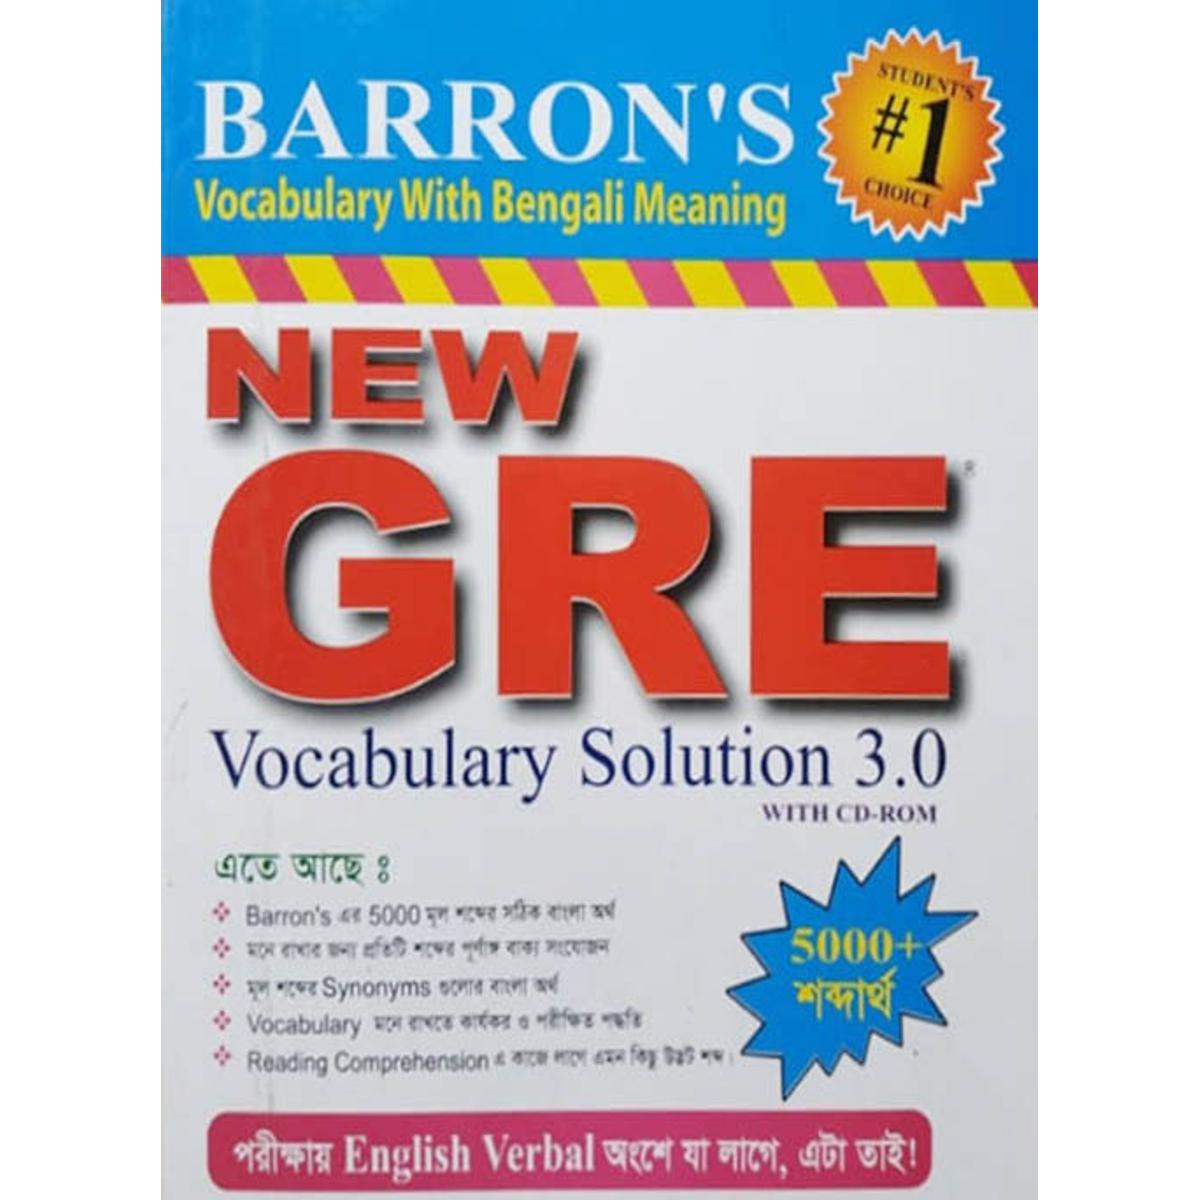 Barron's New GER Vocabulary Solution